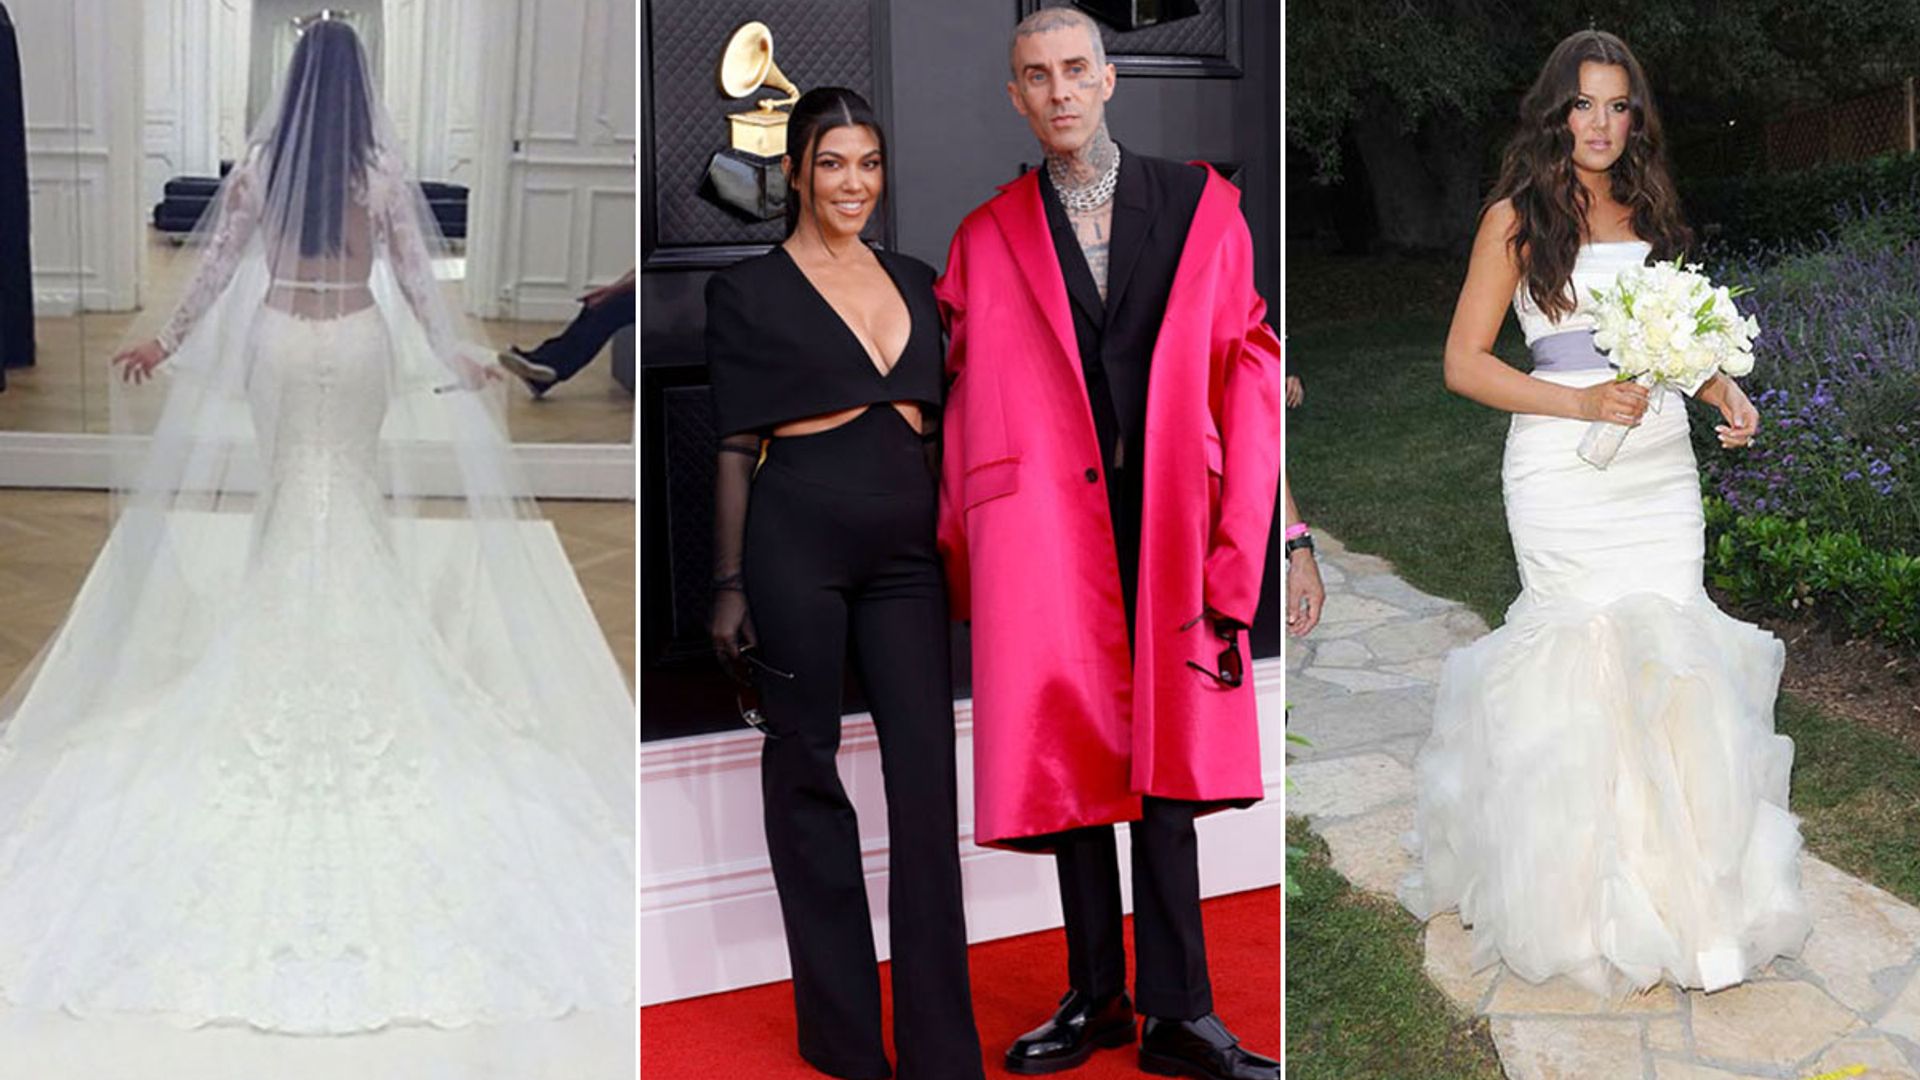 Kourtney Kardashian's wedding was polar opposite to sisters Kim and Khloe's